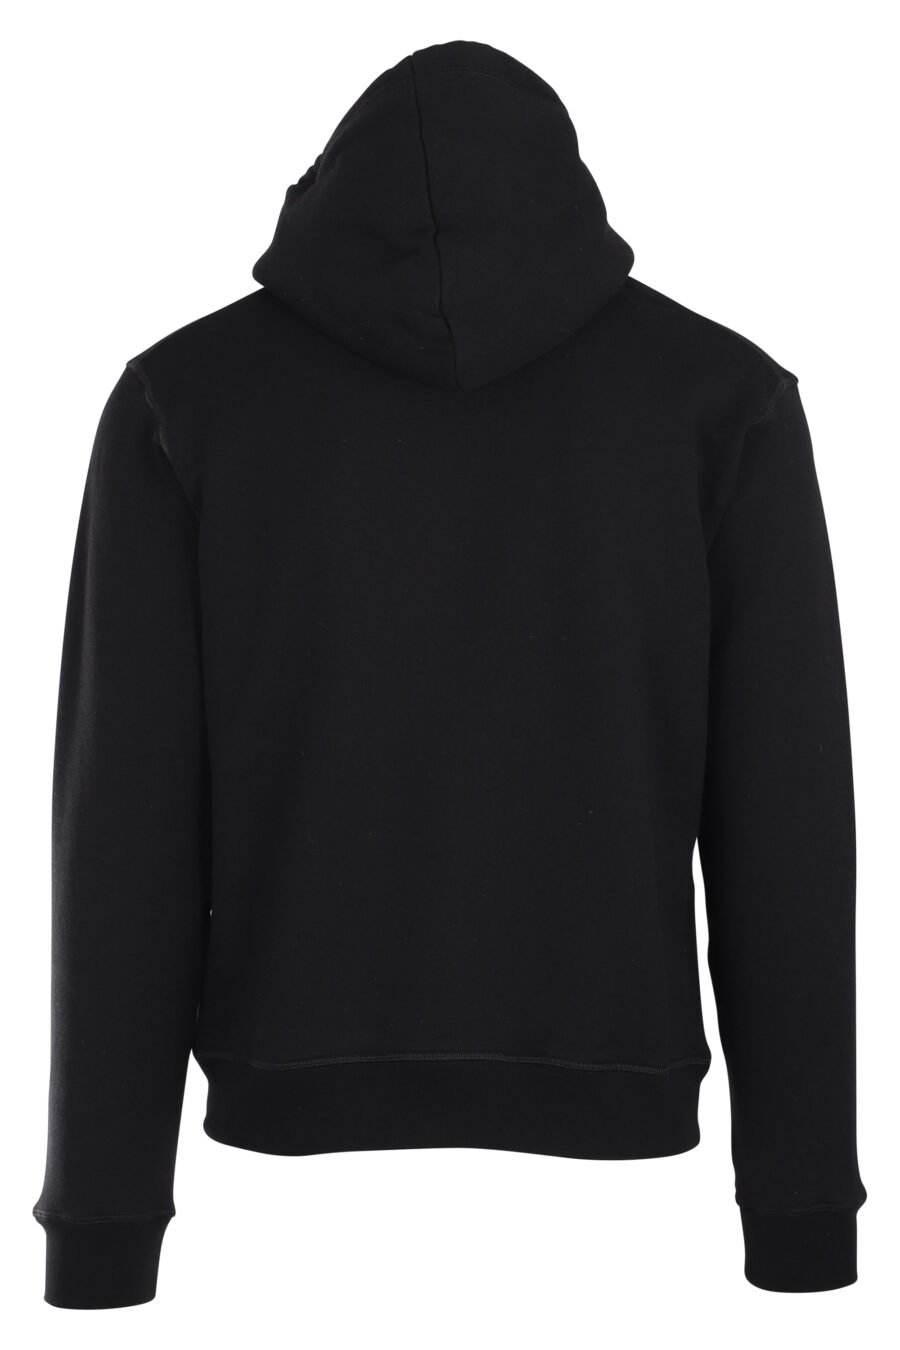 Black hooded sweatshirt with milano logo - IMG 9903